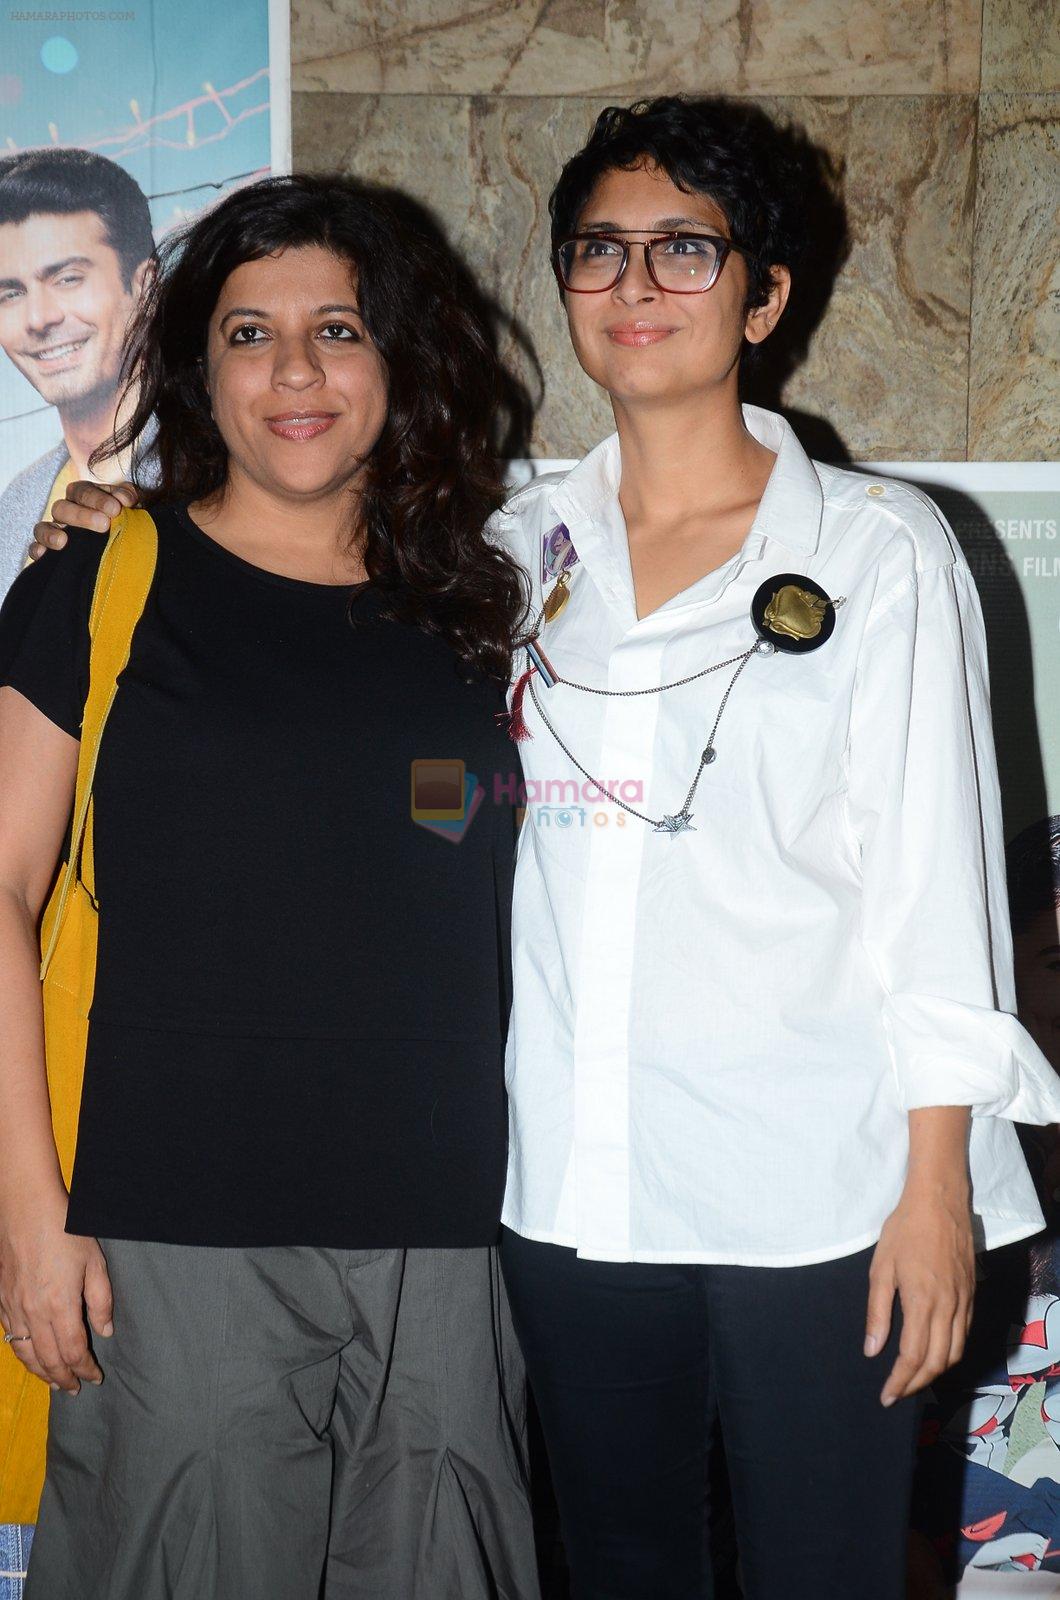 Kiran Rao, Zoya Akhtar at Kapoor N Sons screening on 15th March 2016